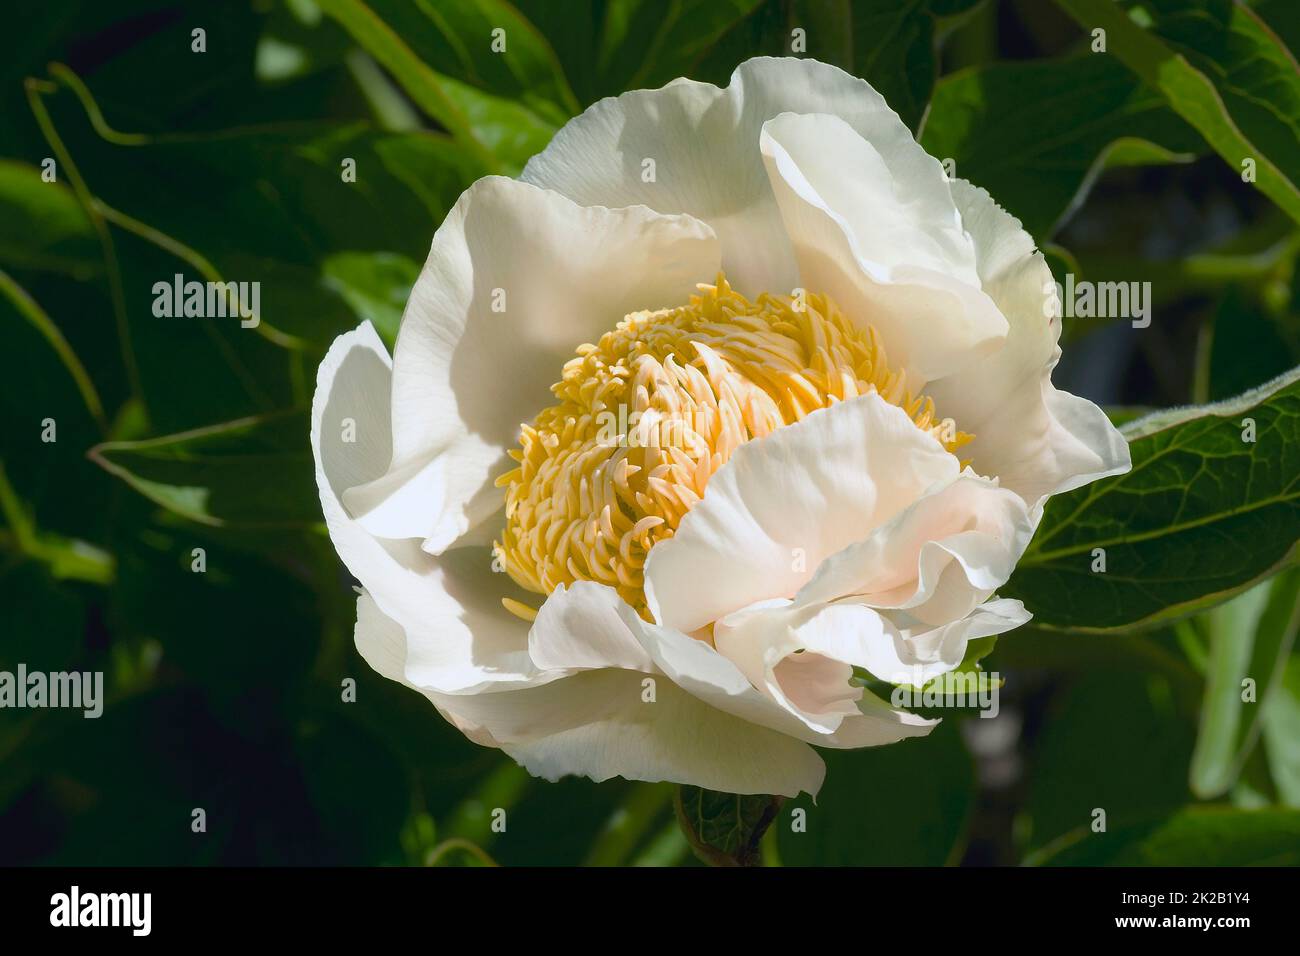 Close-up image of White Innocence peony flower Stock Photo